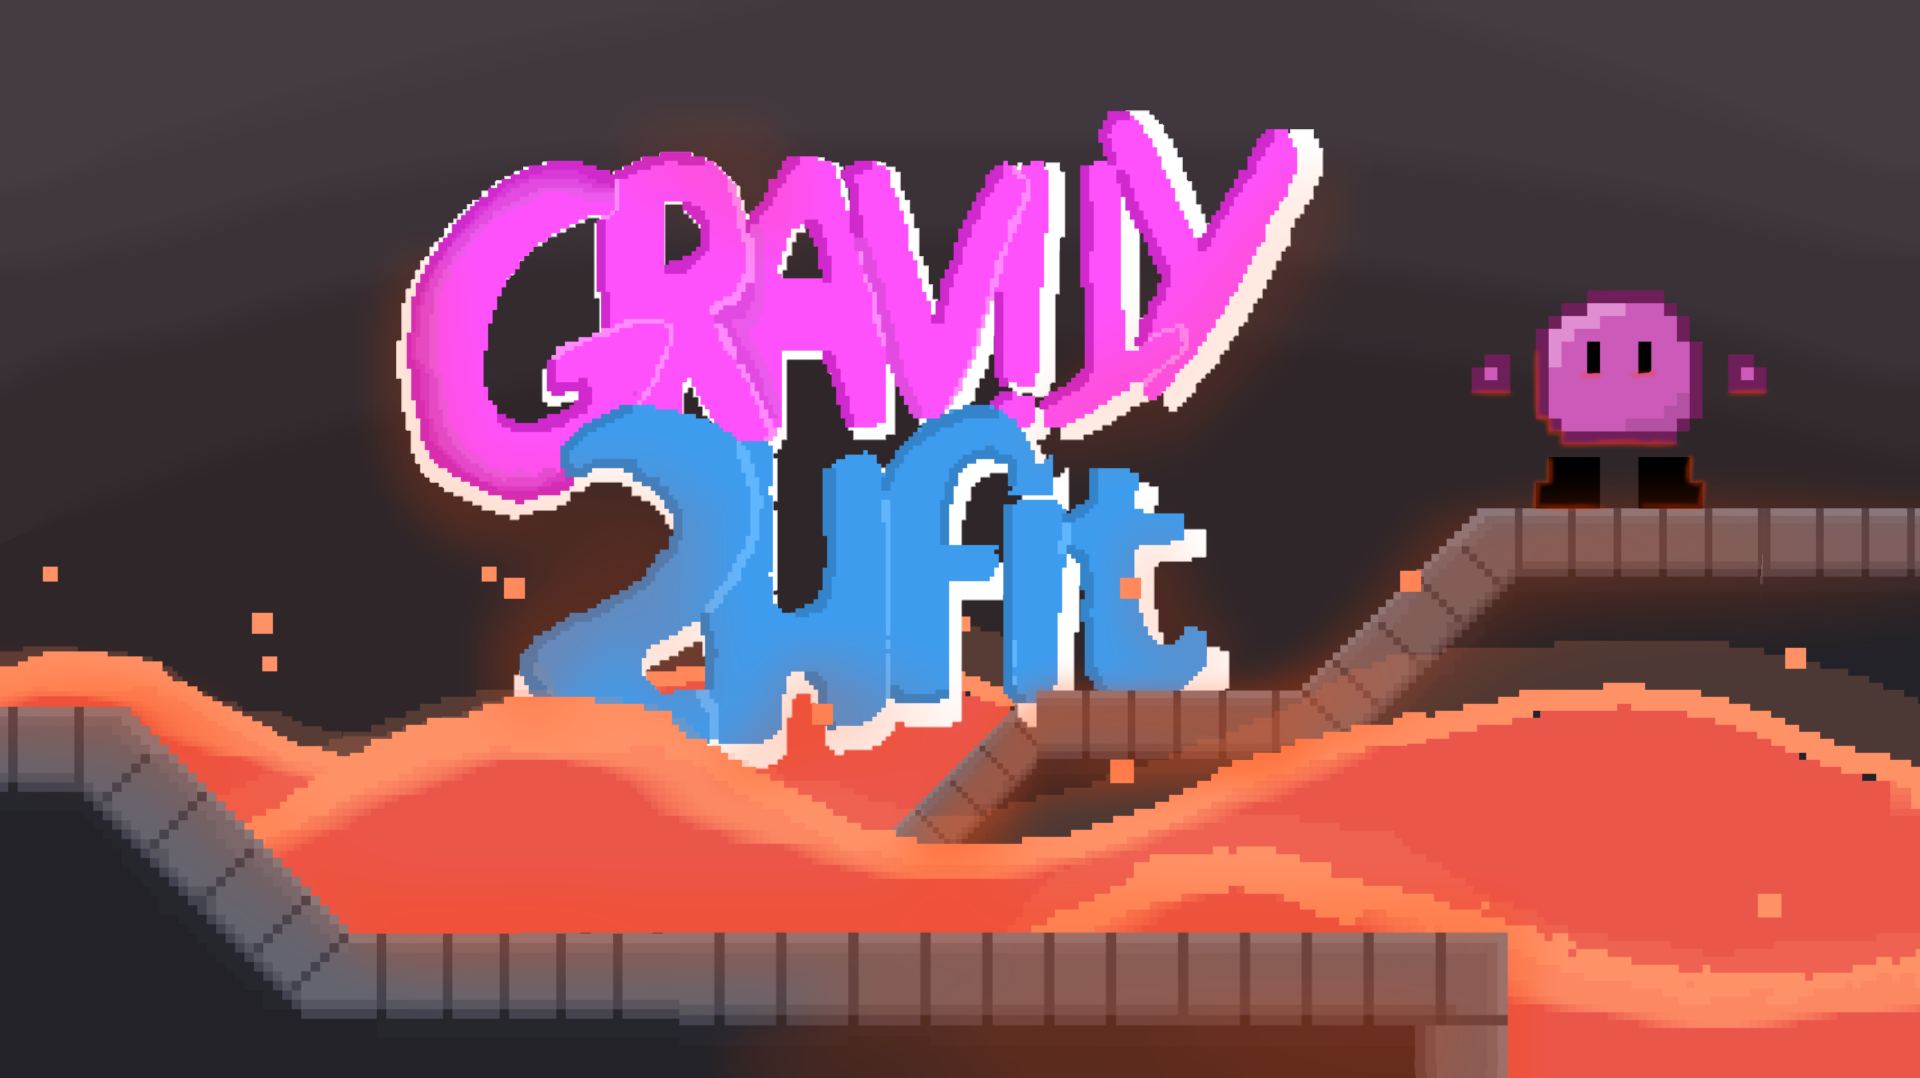 GravityShift Game Image